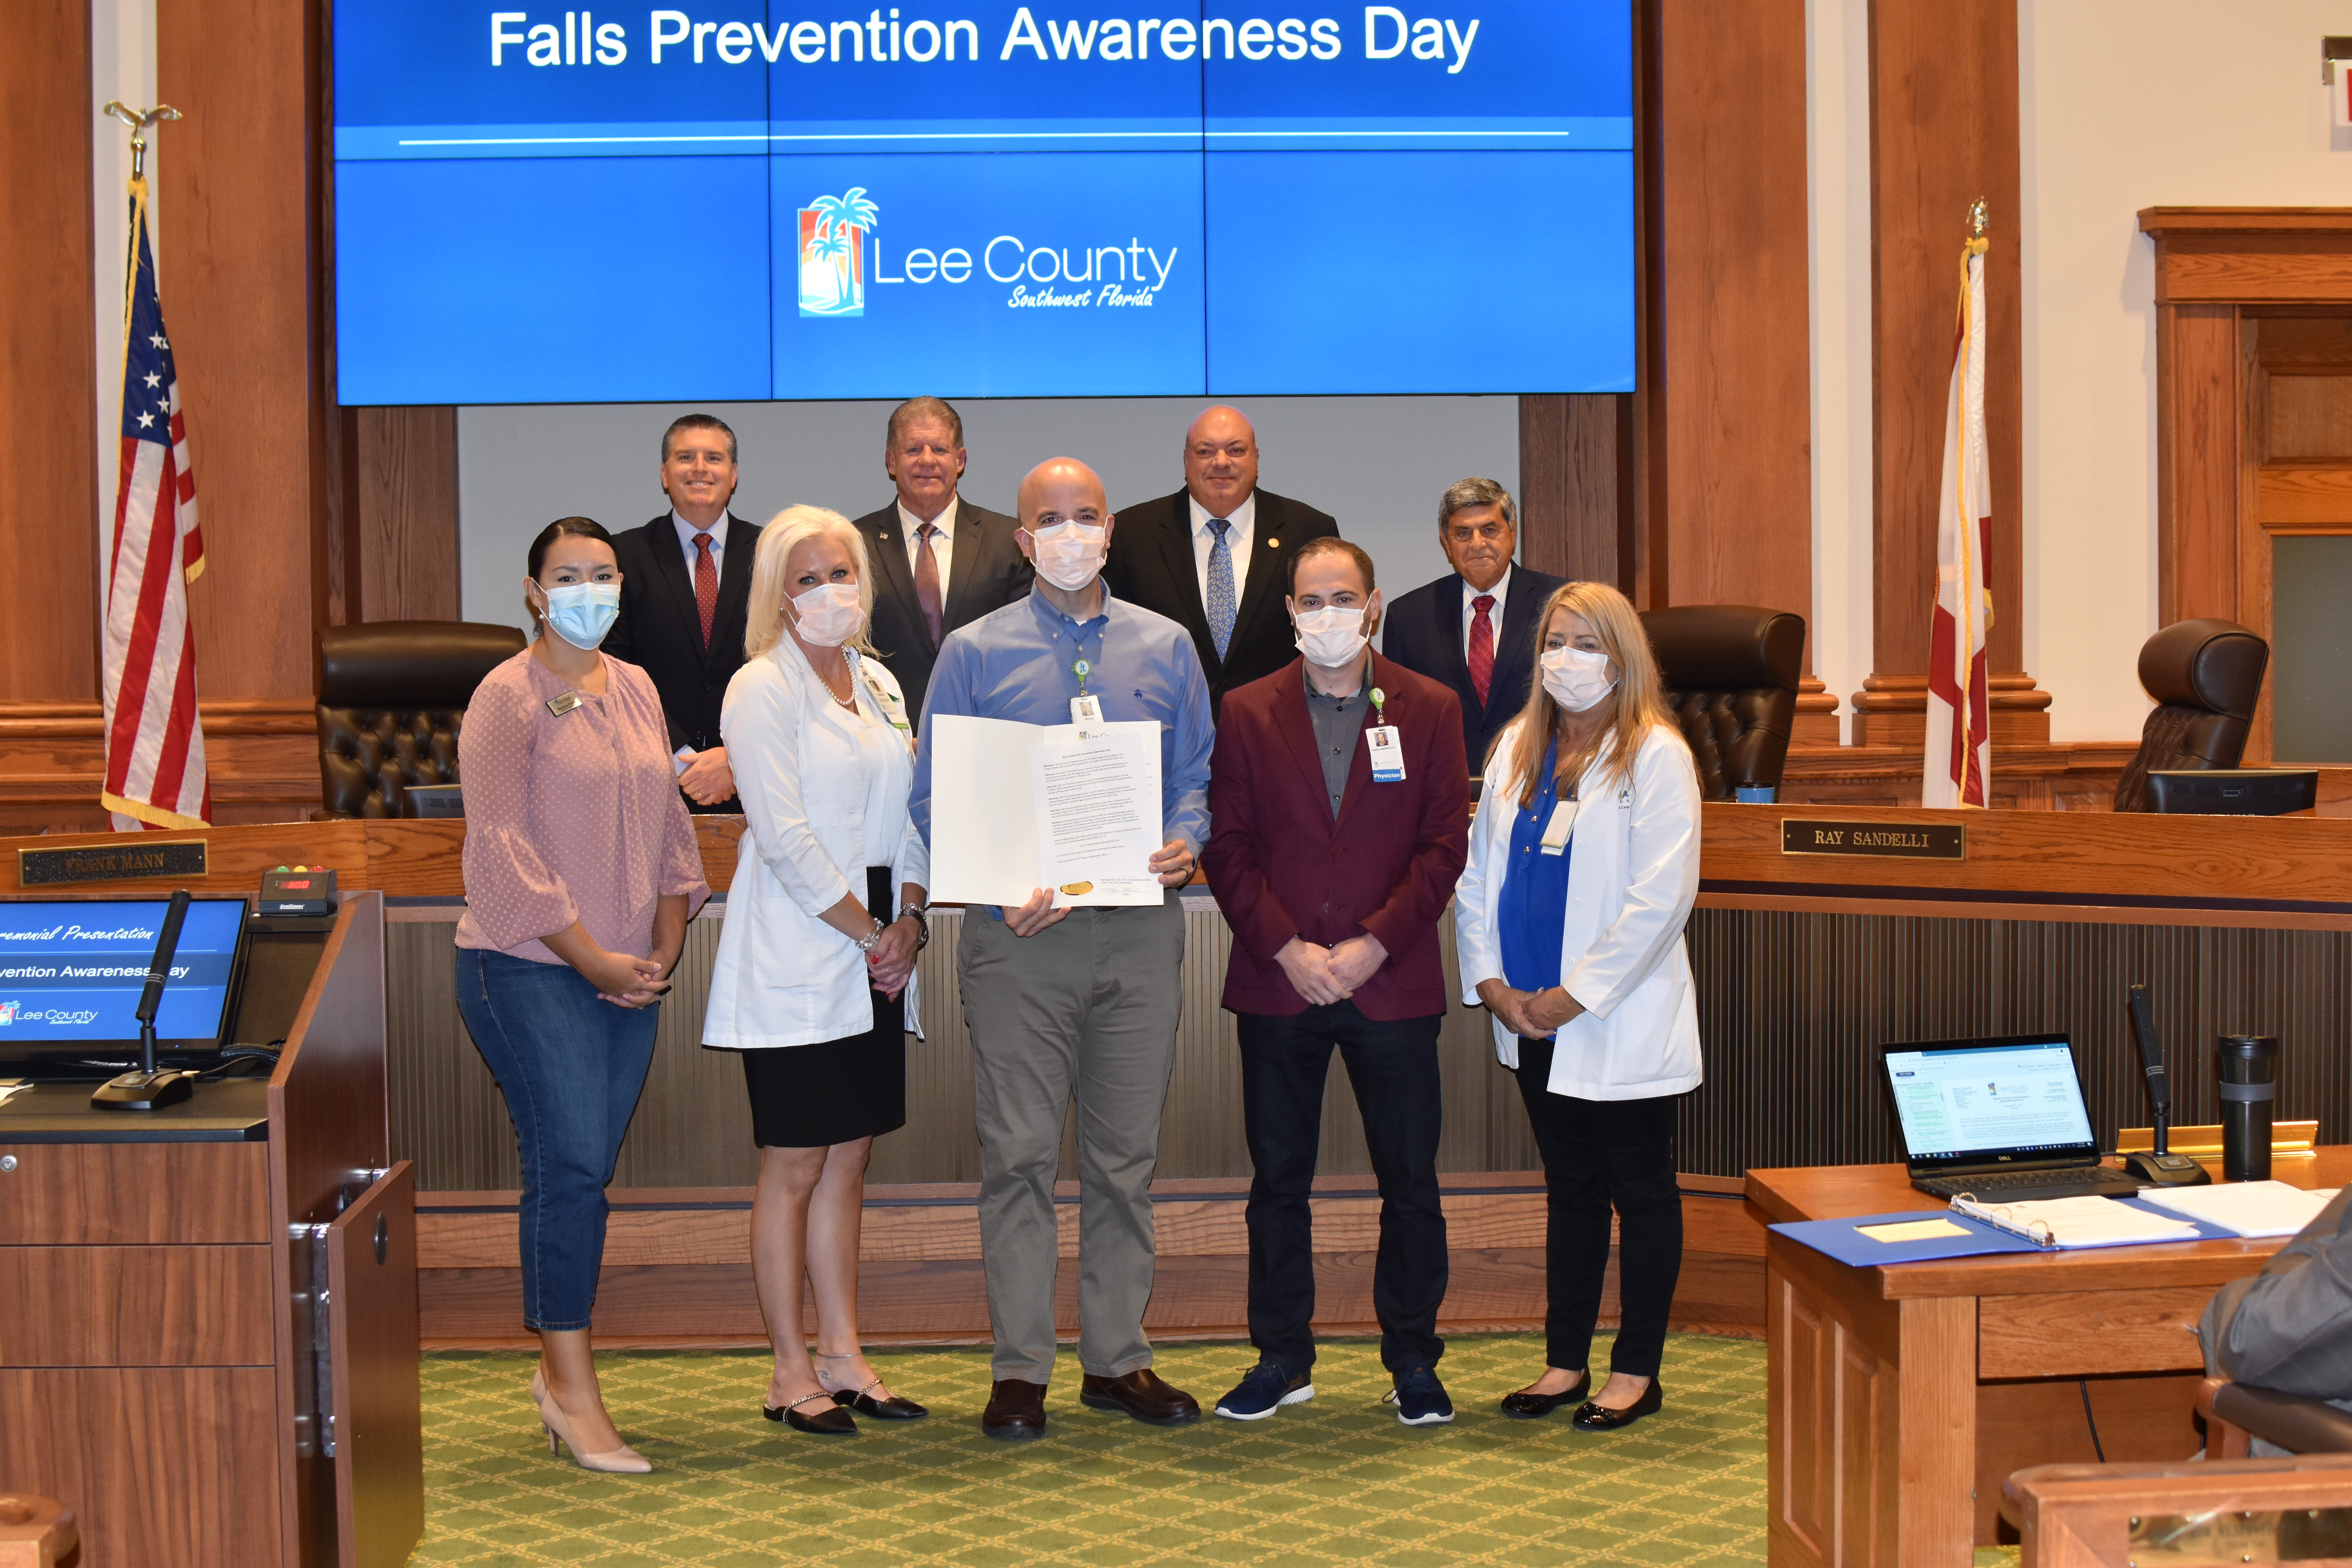 09-21-21 Falls Prevention Awareness Day